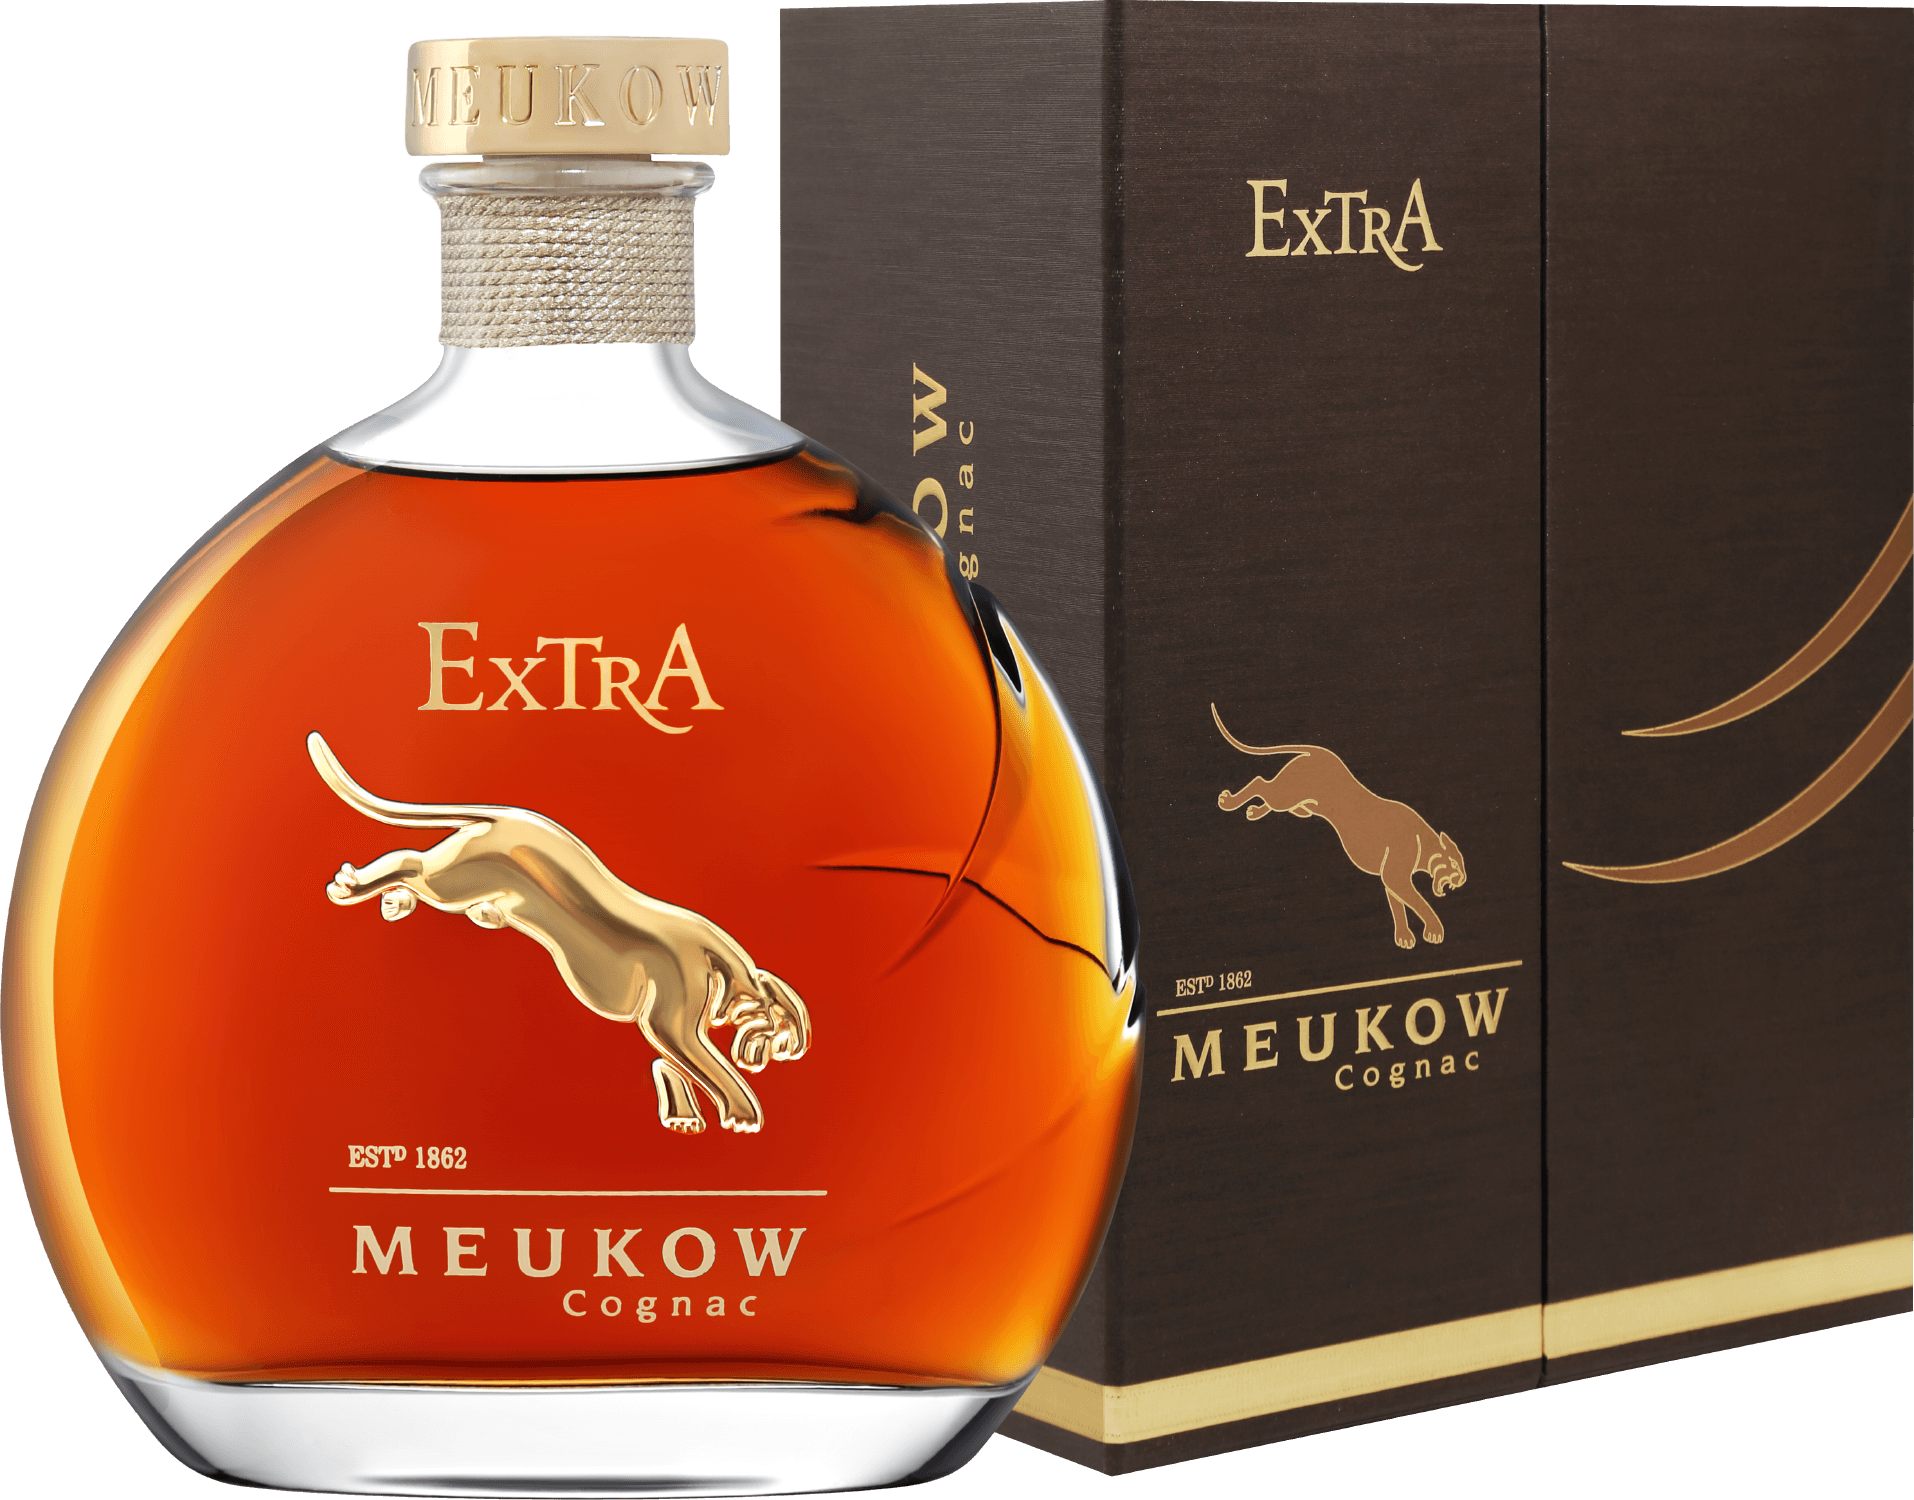 meukow cognac vs gift box Meukow Cognac Extra (gift box)